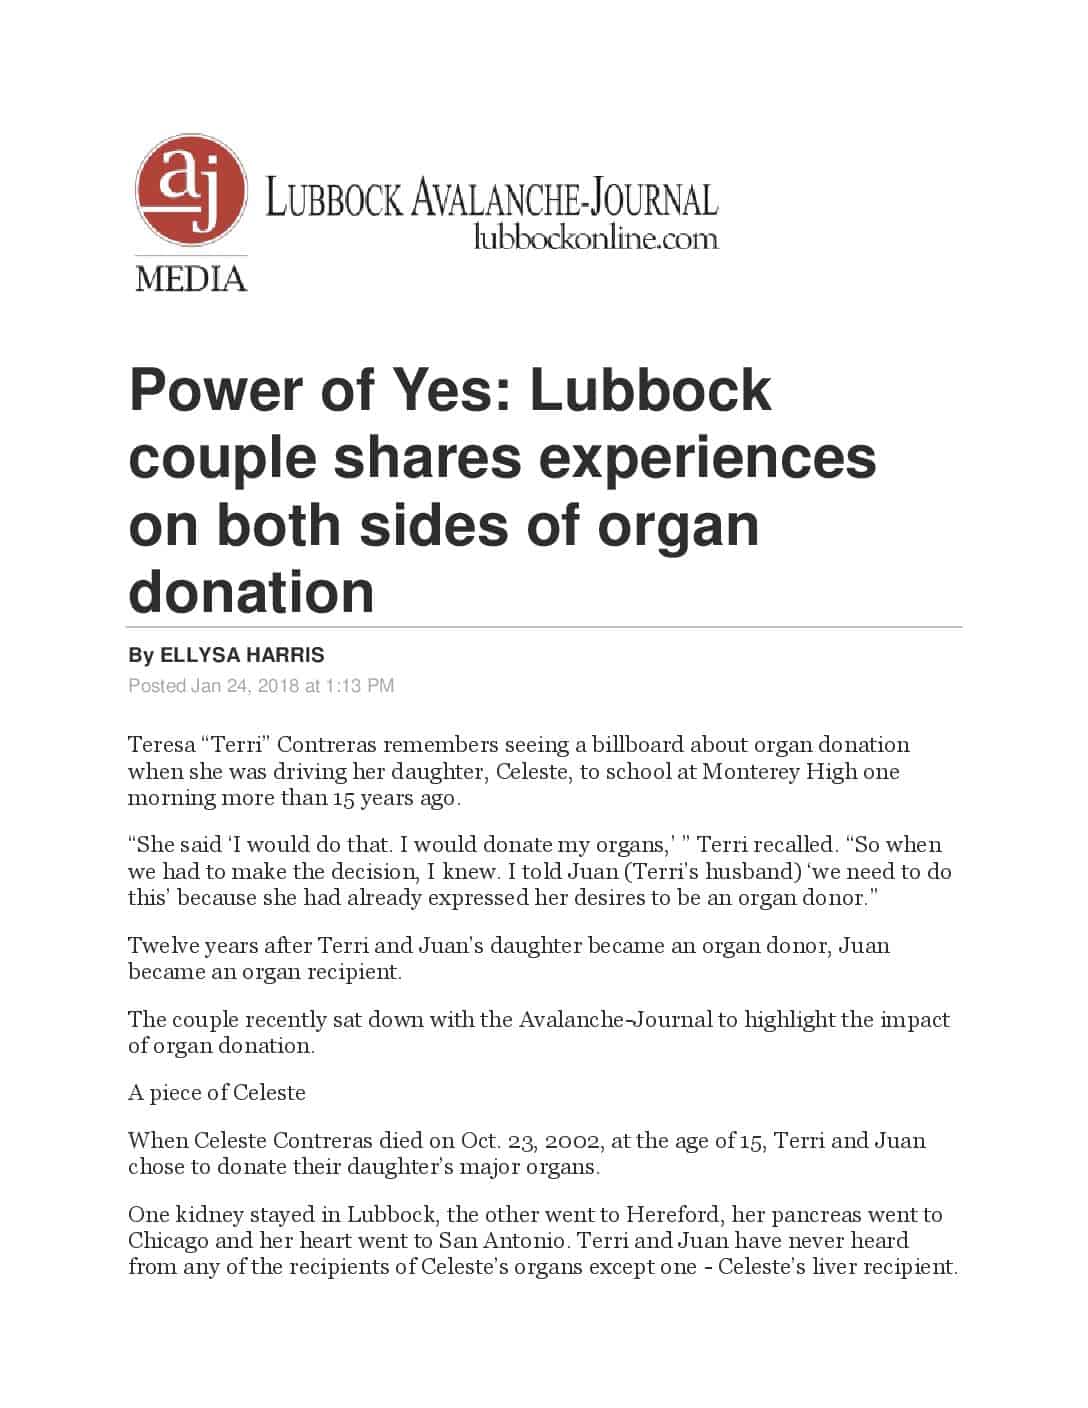 Lubbock Avalanche-Journal – LifeGift